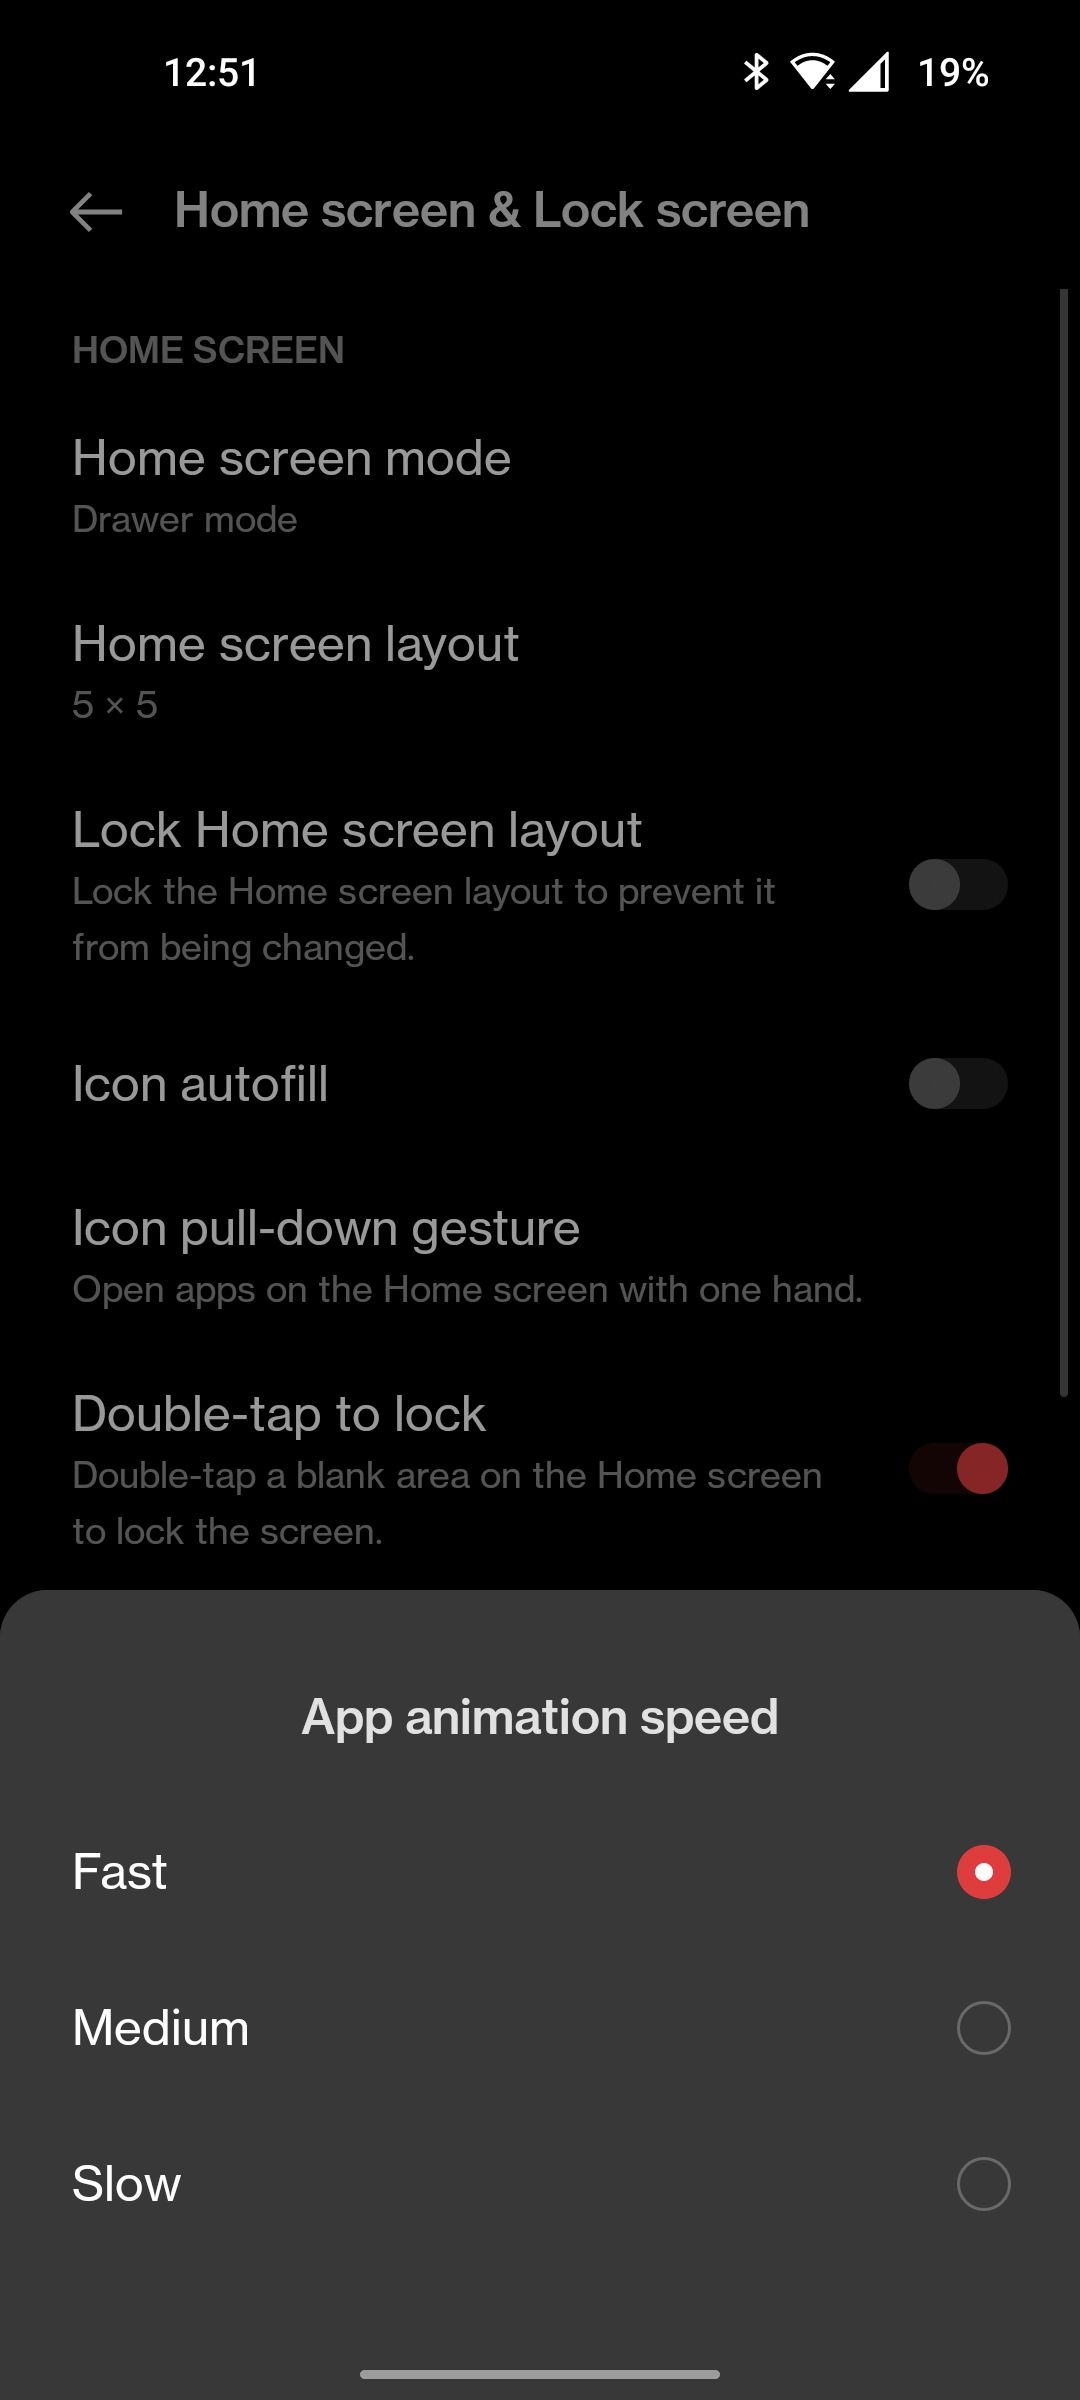 OnePlus app animation options with three different speeds